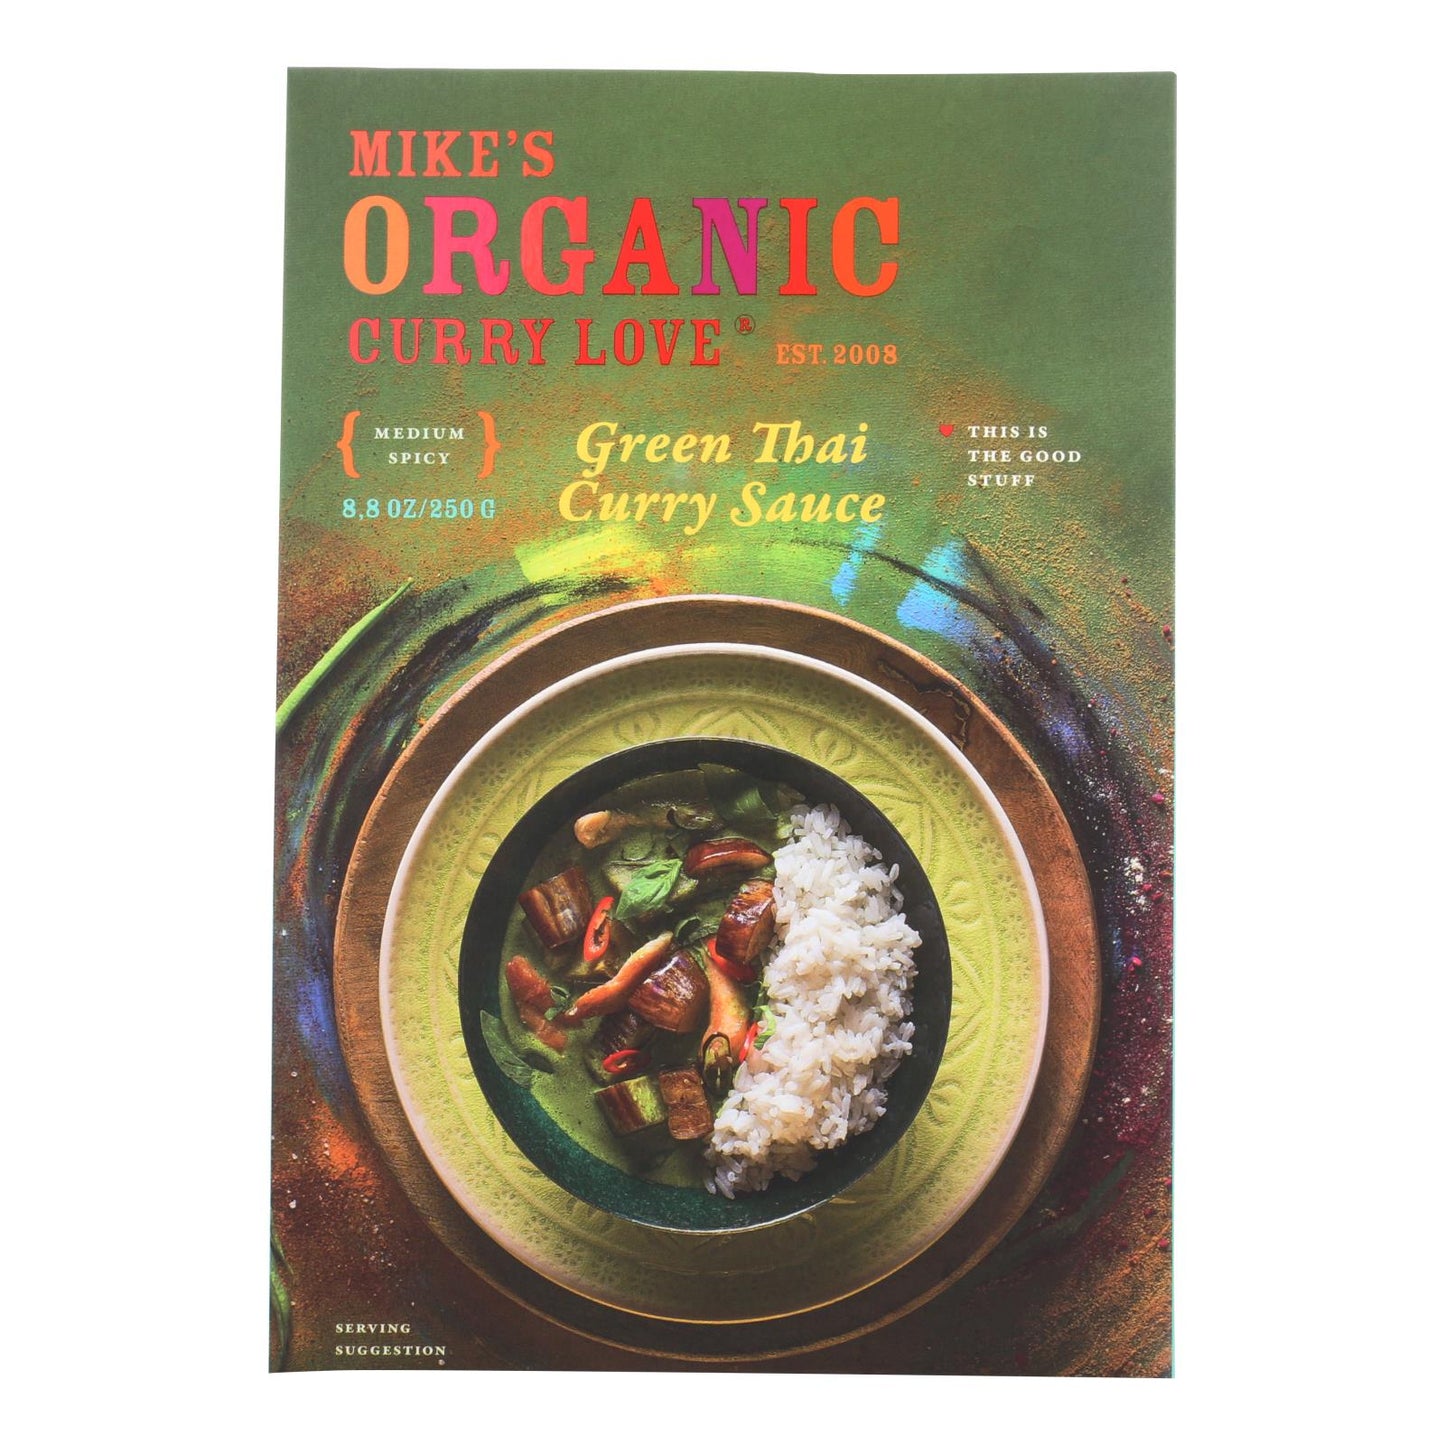 Mike's Organic Curry Love - Organic Curry Simmer Sauce - Green Thai - Case Of 6 - 8.8 Fl Oz.